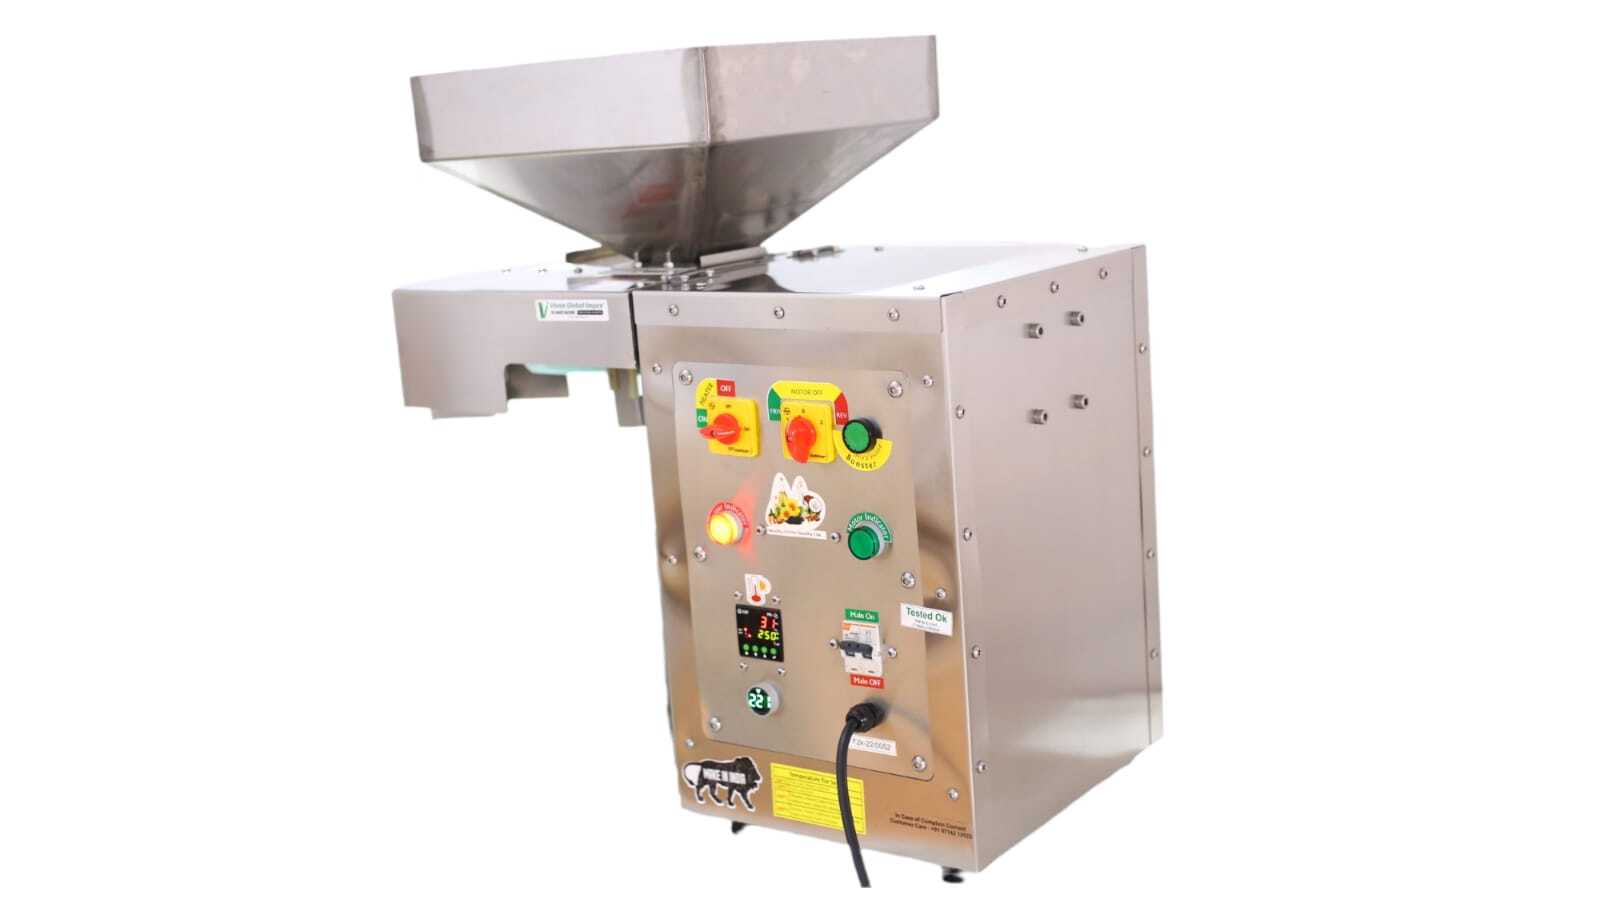 Peanut Oil Extraction Machine For Business 3600Watt